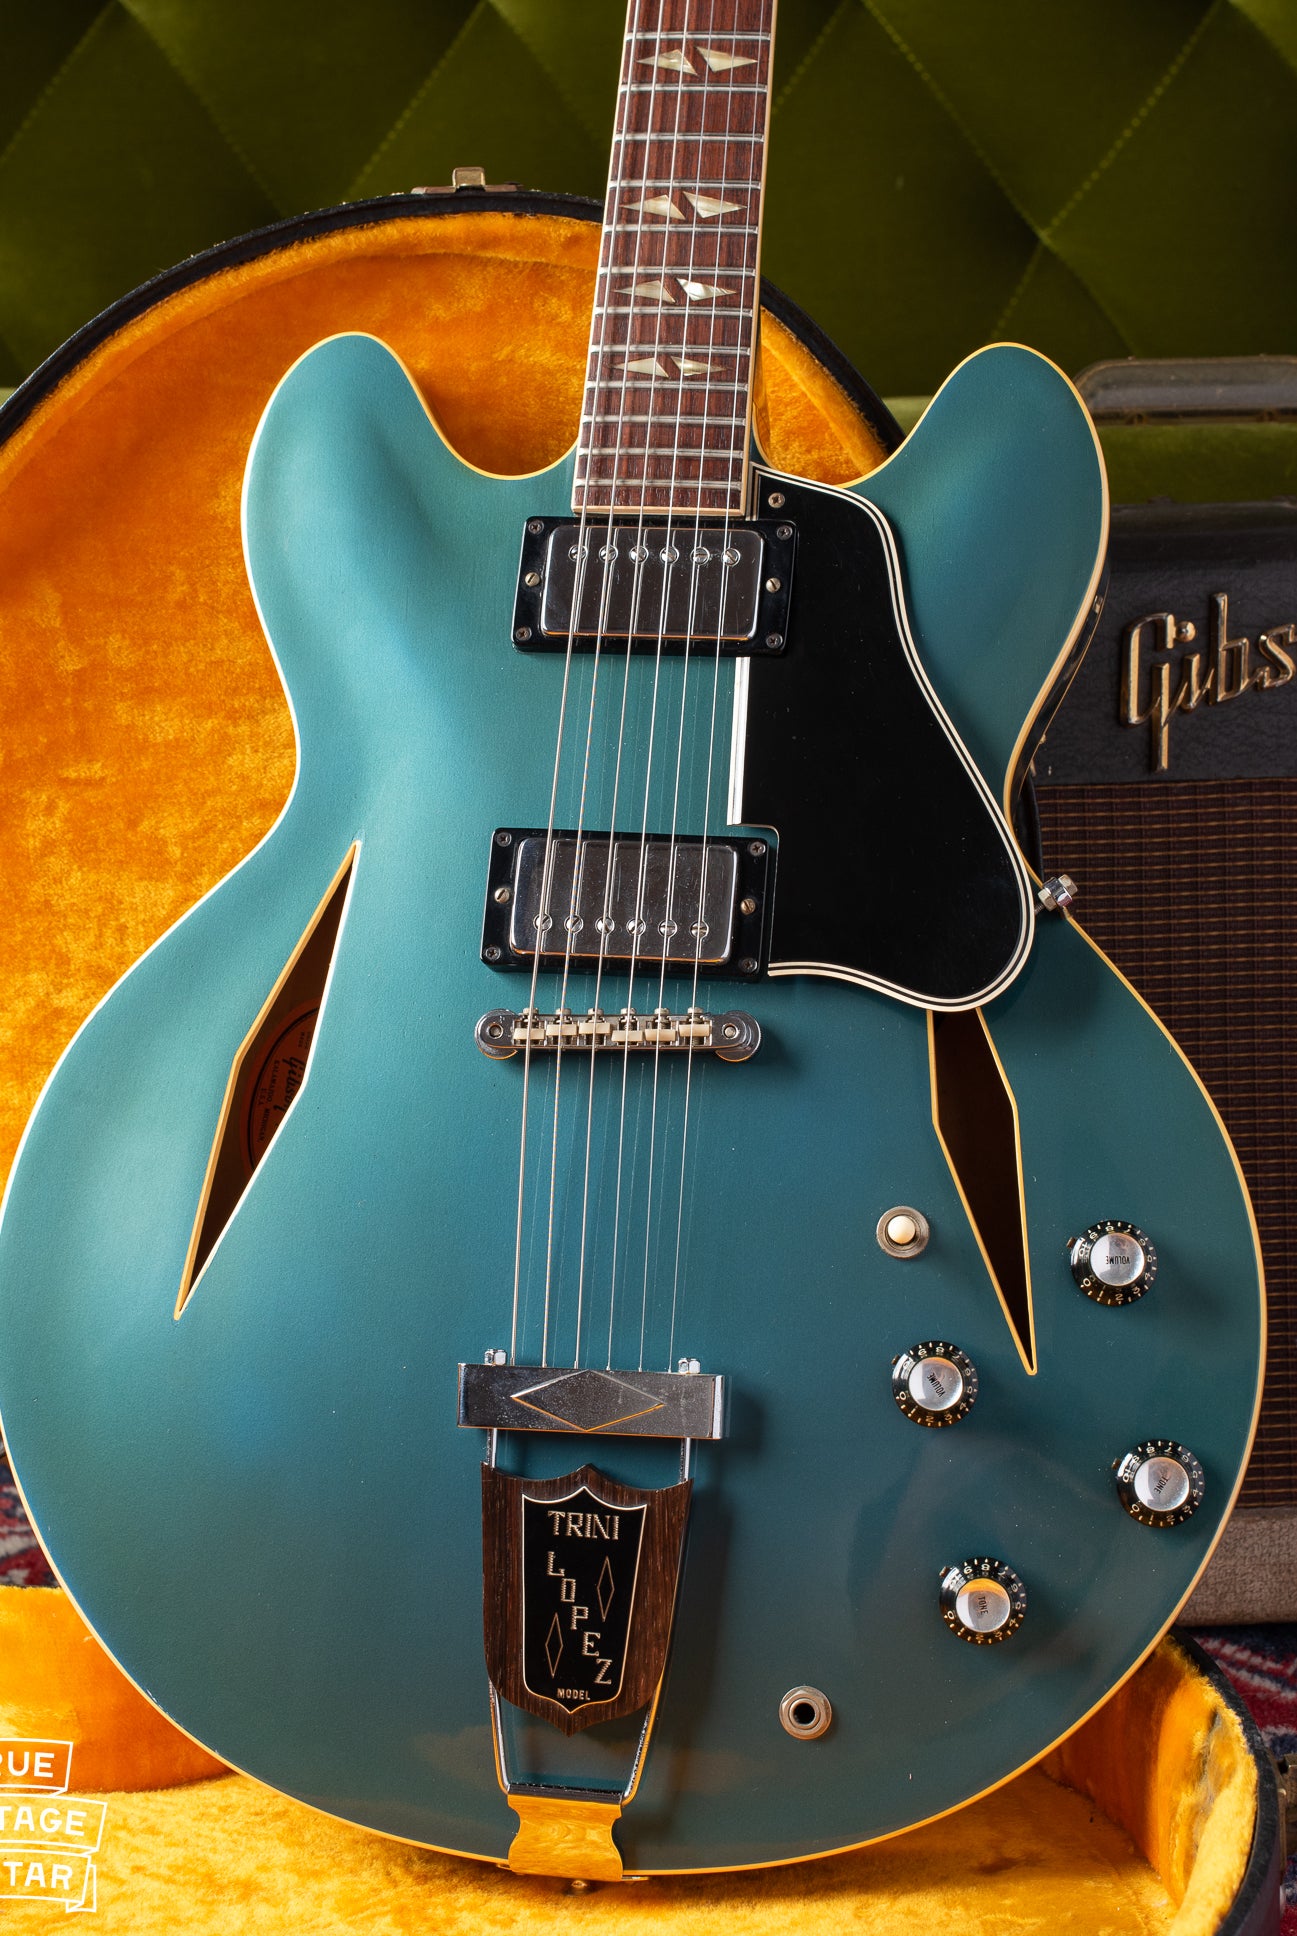 1966 Gibson Trini Lopez Standard guitar in Pelham Blue finish